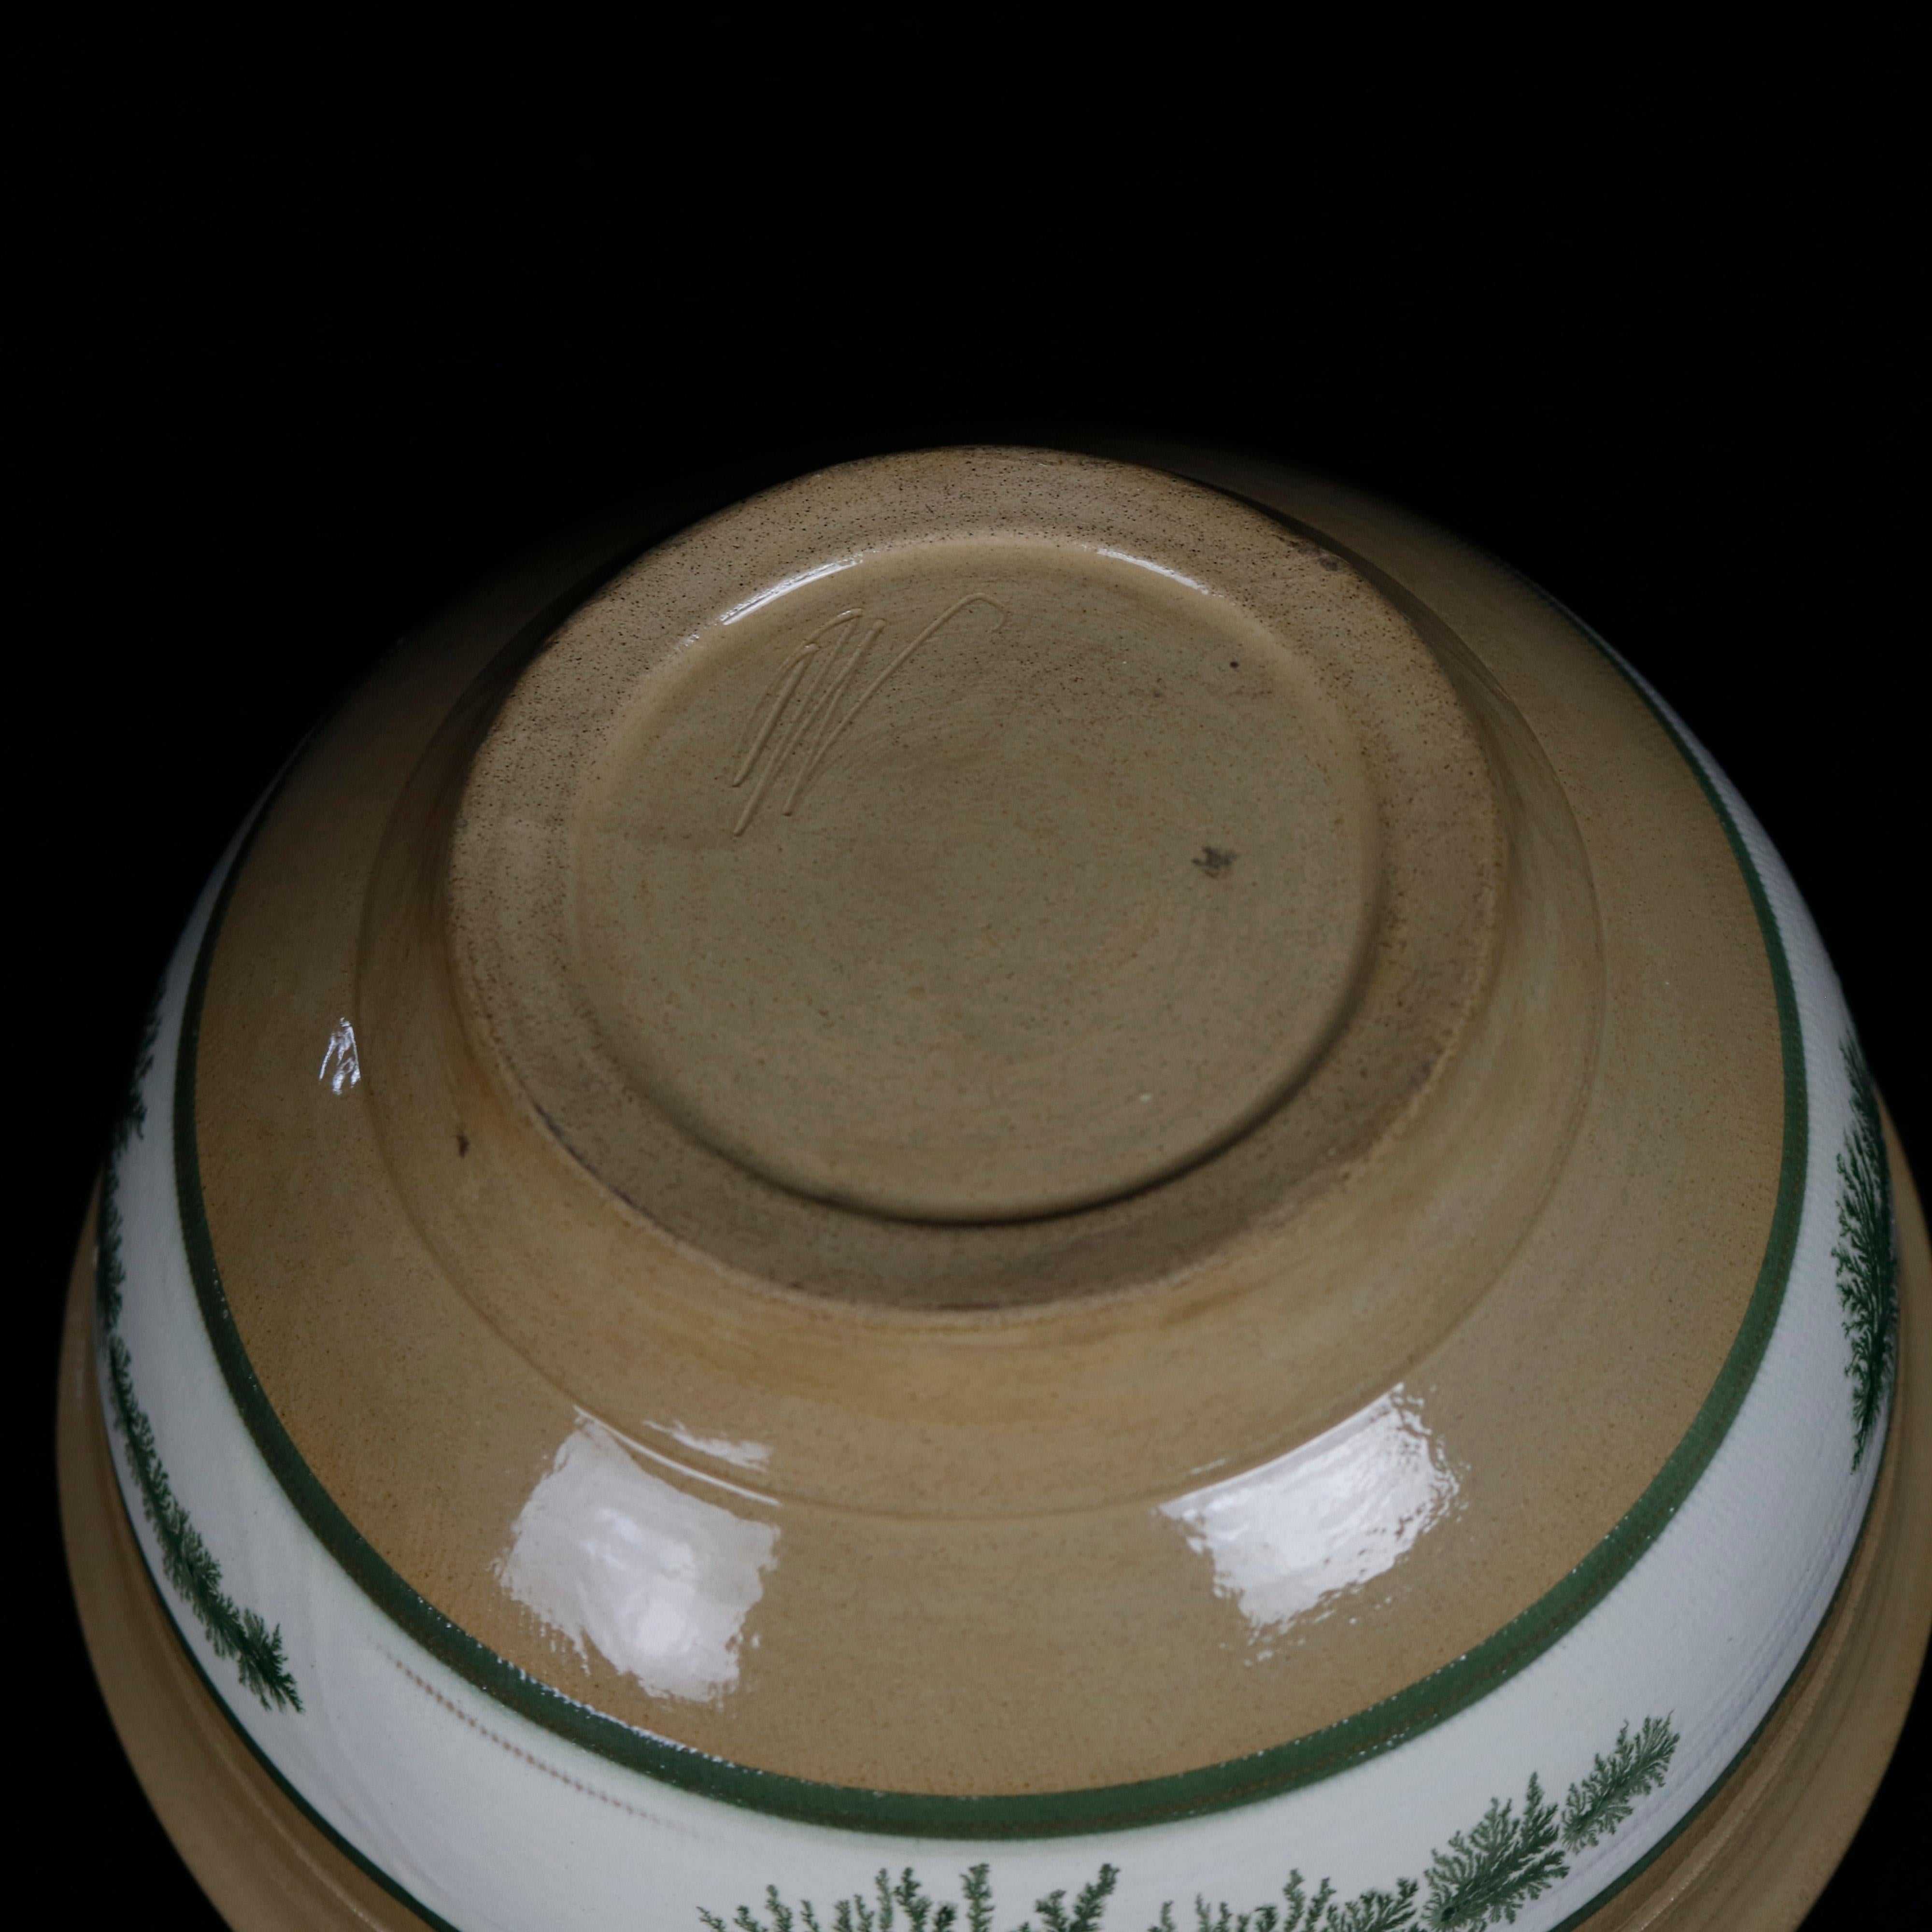 Nested Set of 3 Seaweed Mocha Decorated Pottery Mixing Bowls, 20th Century (20. Jahrhundert)